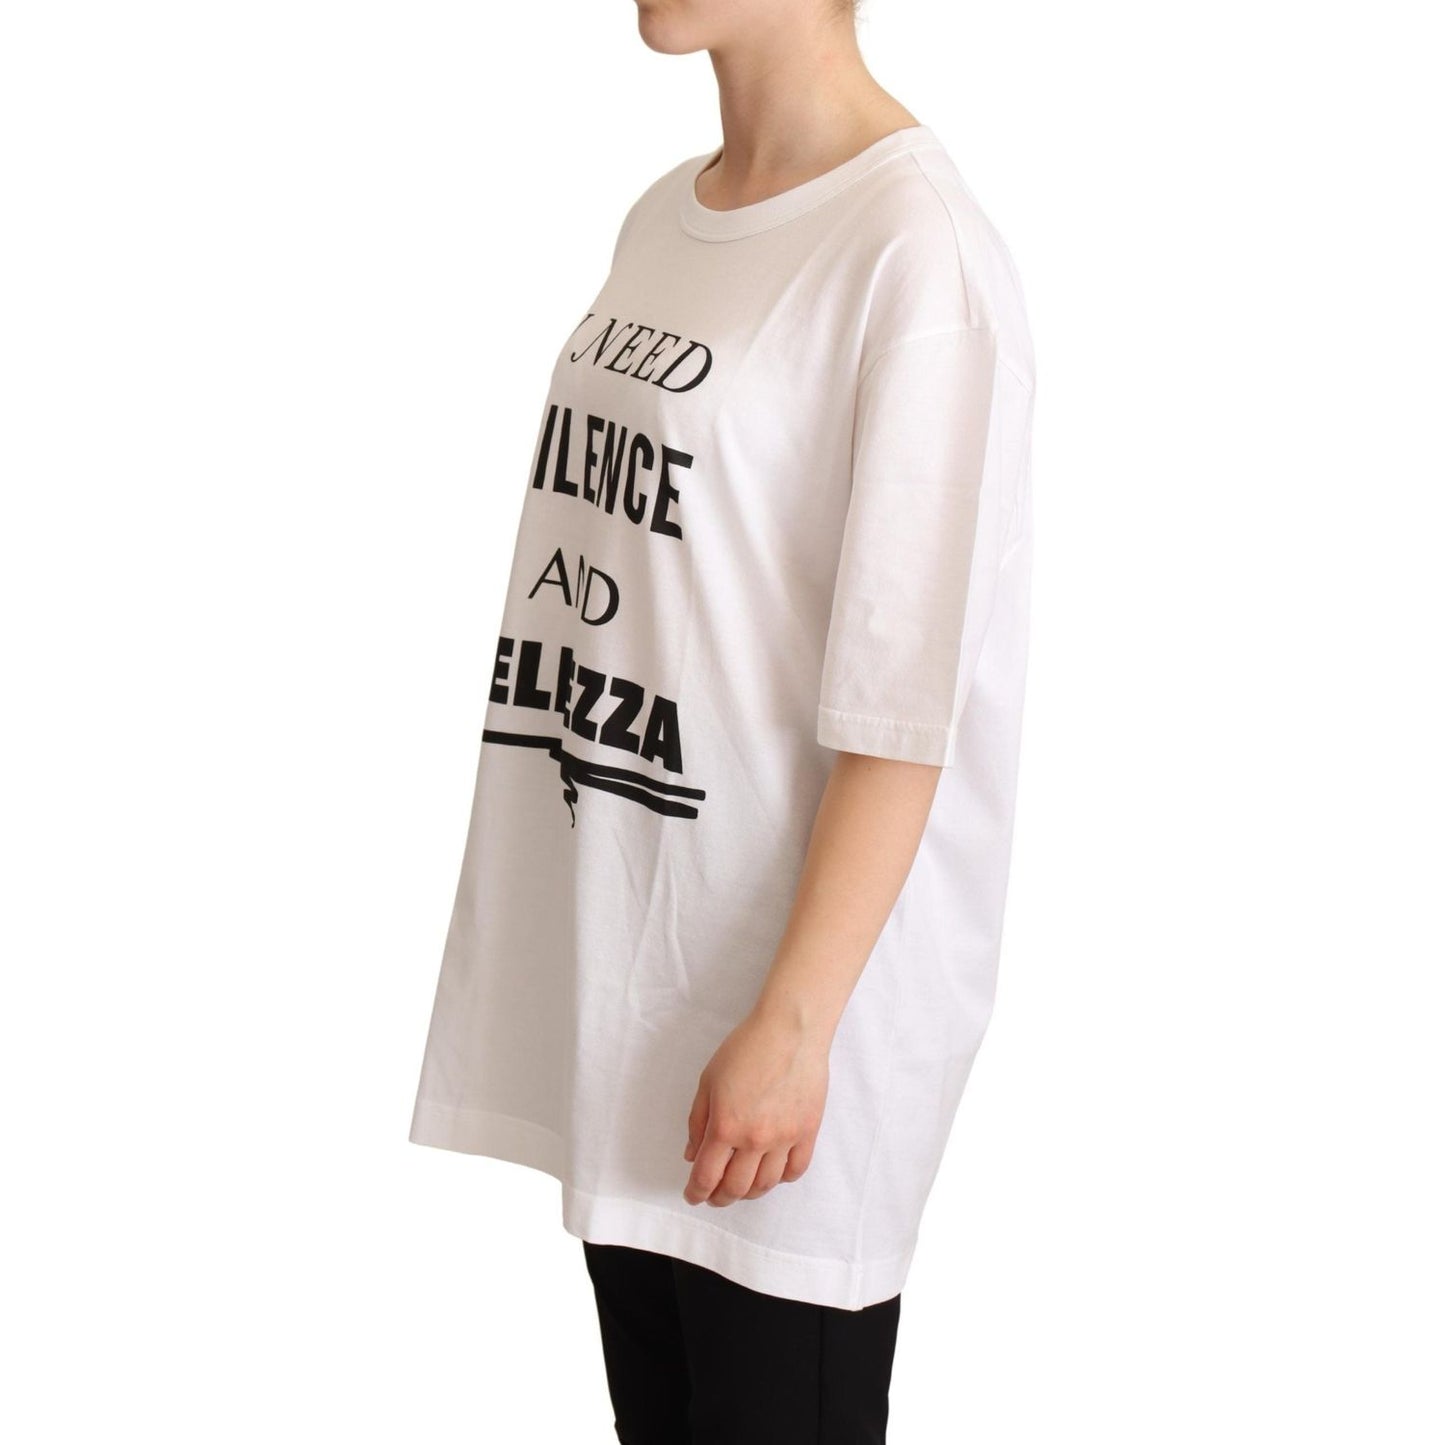 Dolce & Gabbana Elegant Motive Print Crewneck T-shirt WOMAN T-SHIRTS white-cotton-bellezza-motive-top-t-shirt IMG_9574-scaled-a663a5dd-54d.jpg